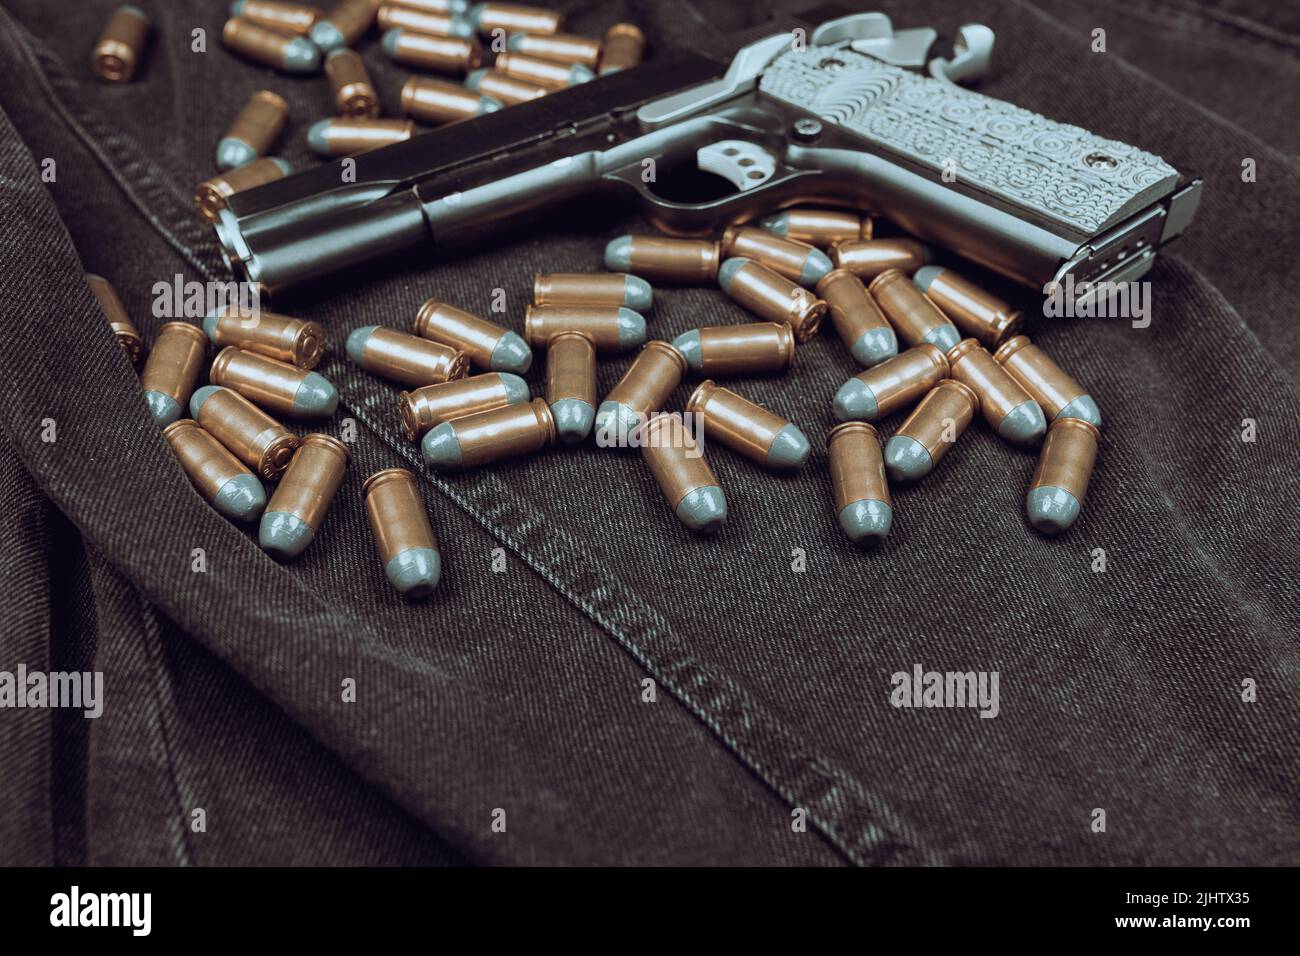 Model 1911 pistol and cartridges (.45 ACP) on a black denim background Stock Photo